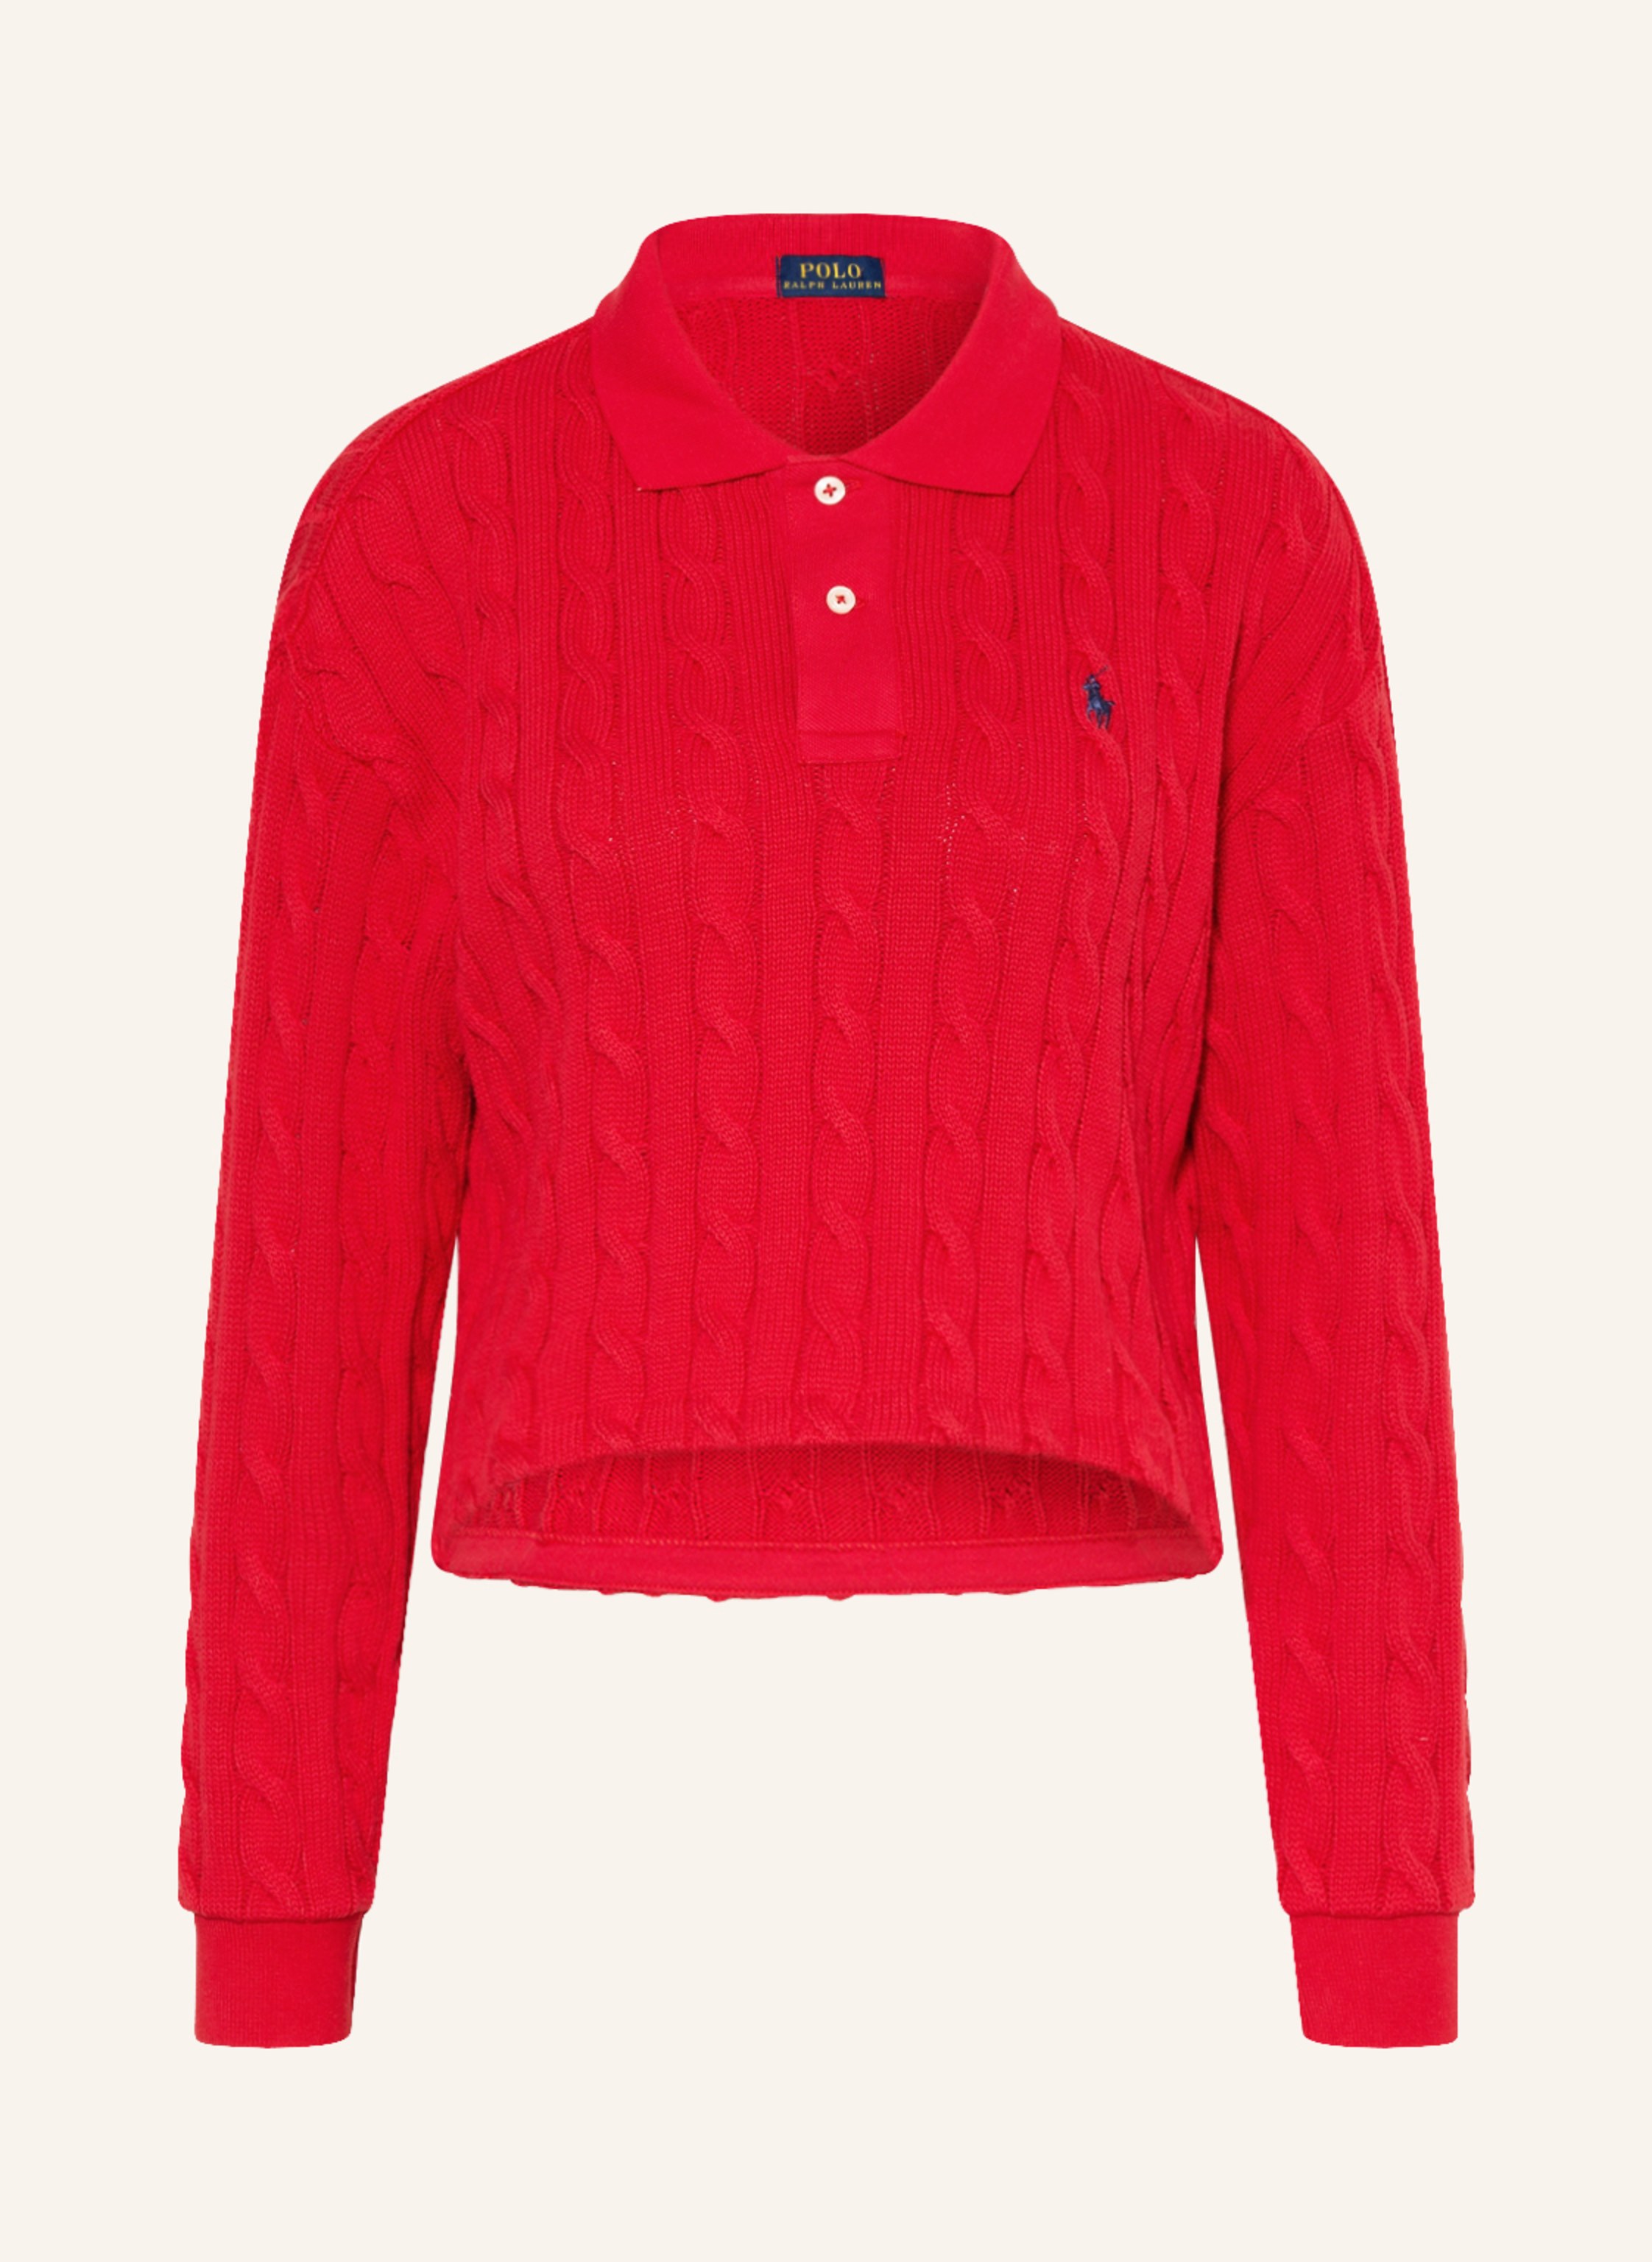 POLO RALPH LAUREN Sweater red | Breuninger